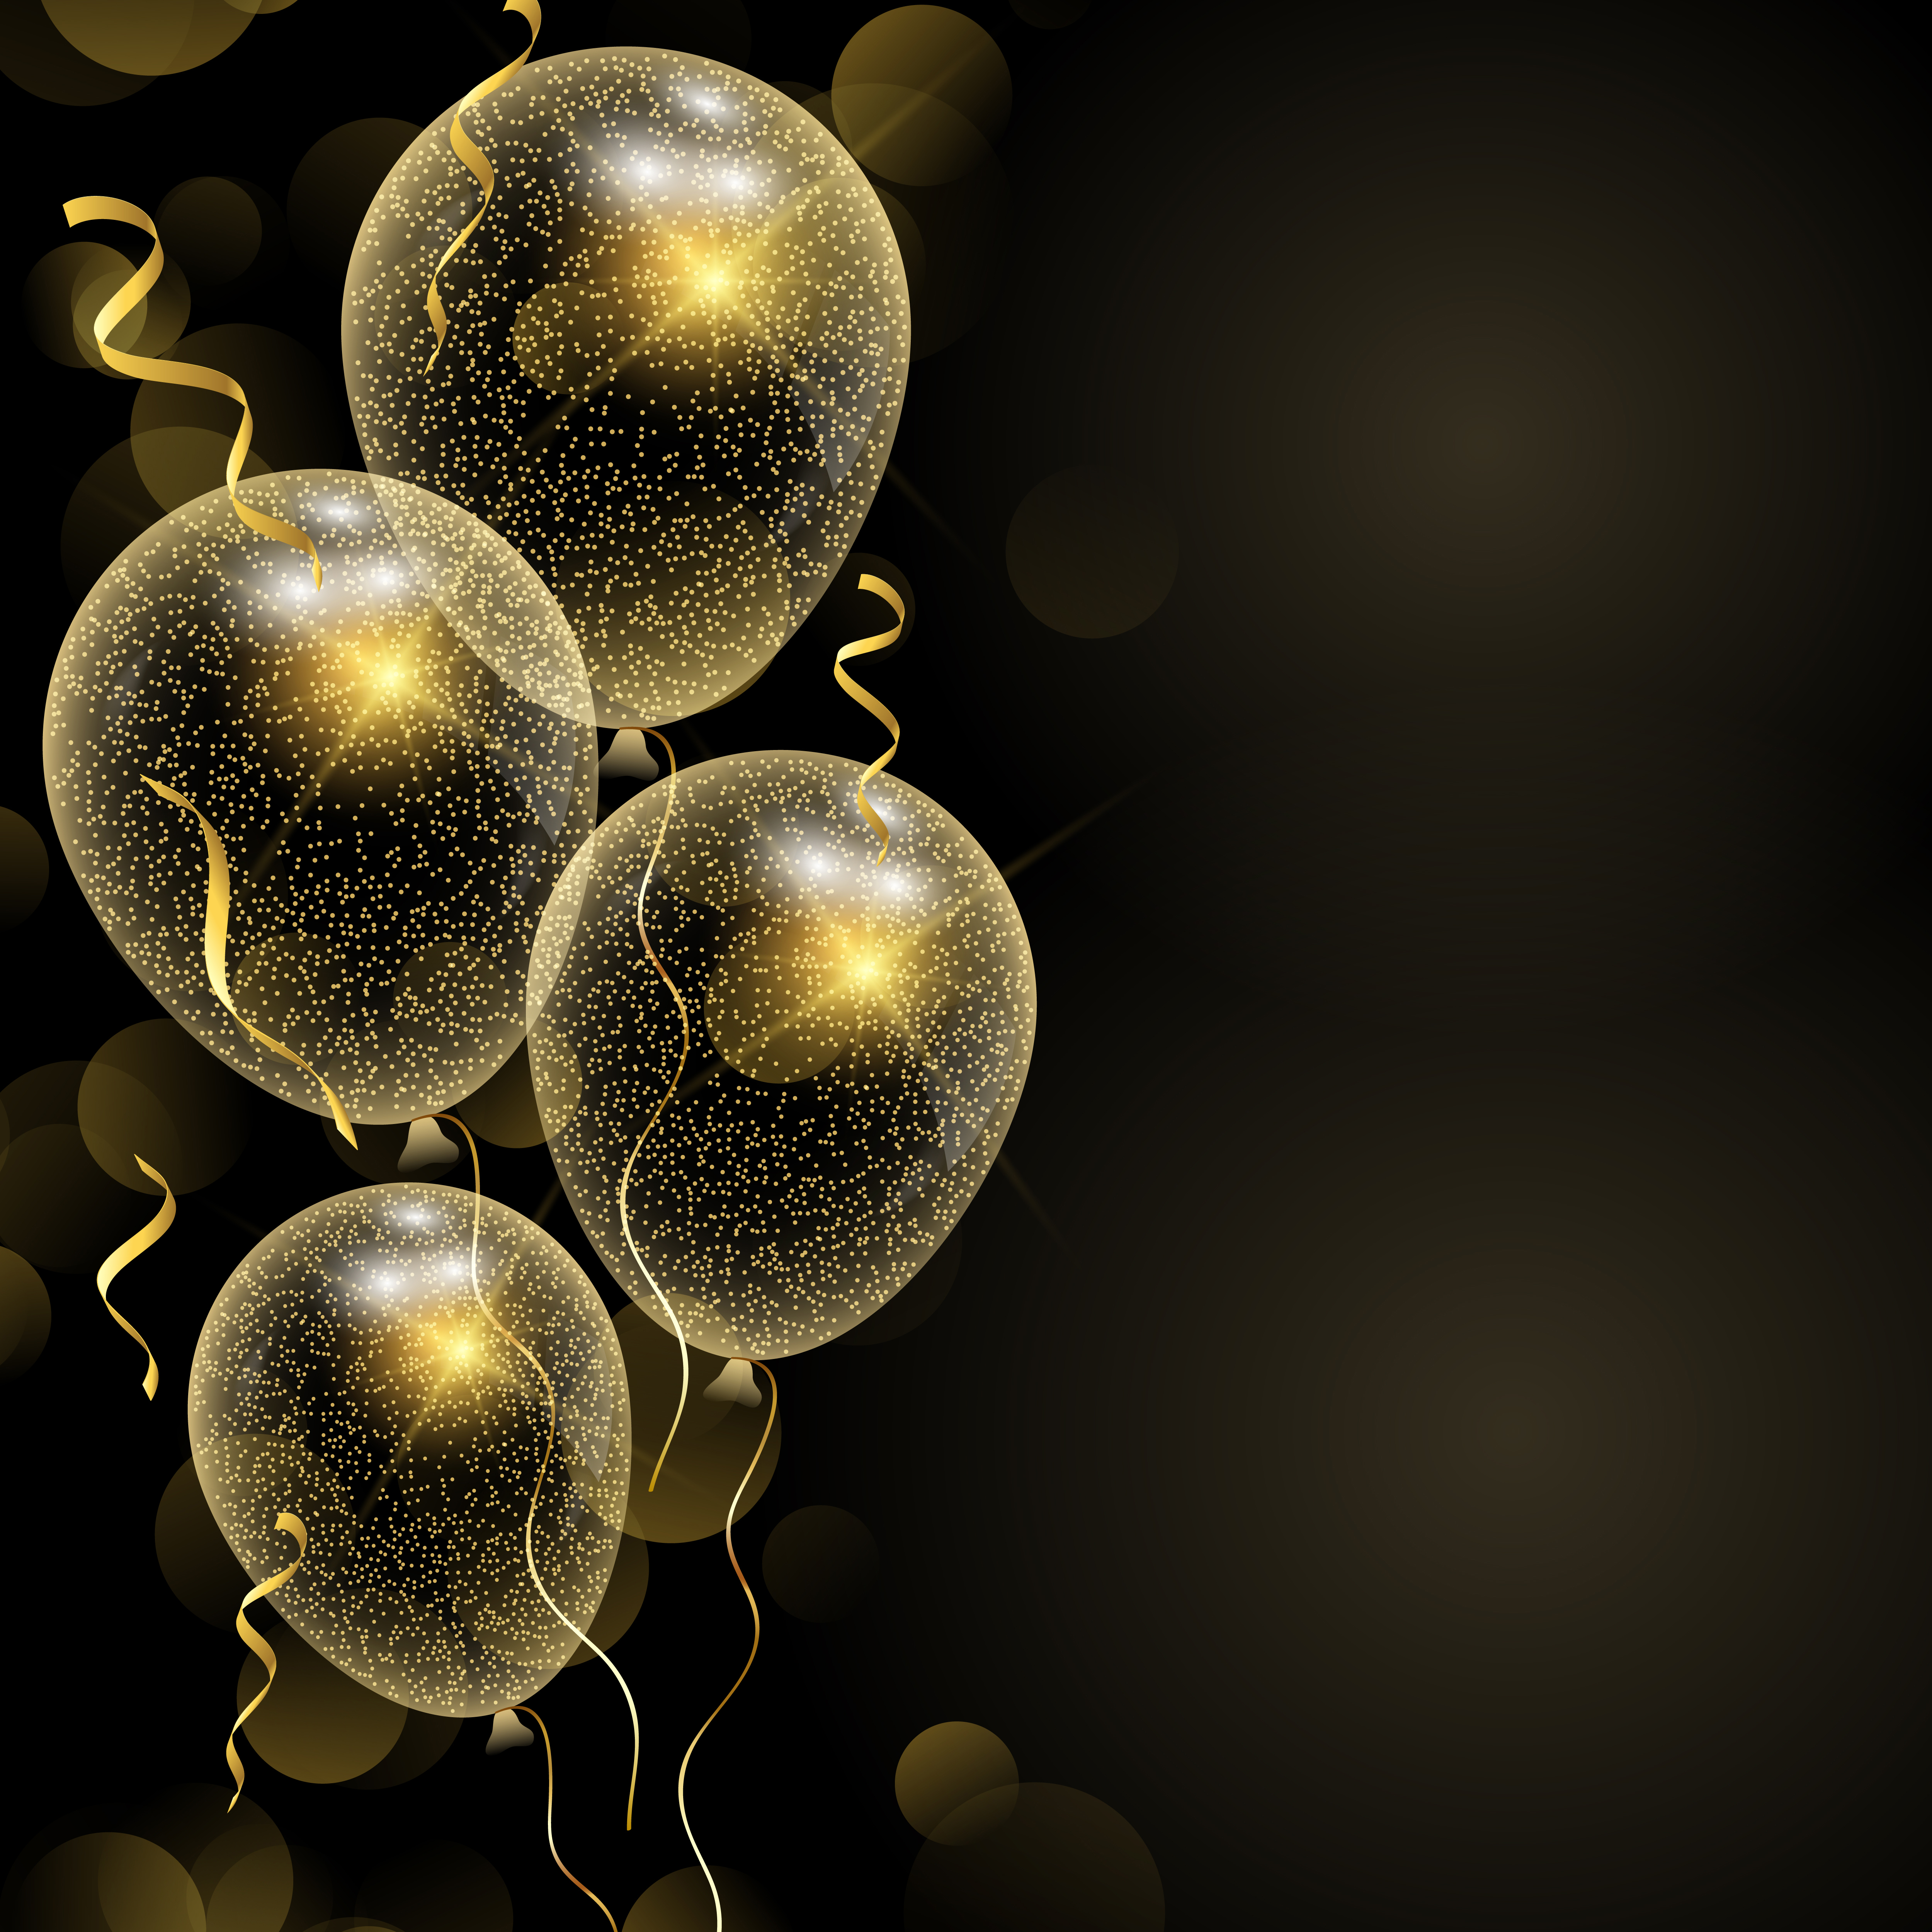 Fondo de celebración con brillantes globos dorados. 343026 Vector